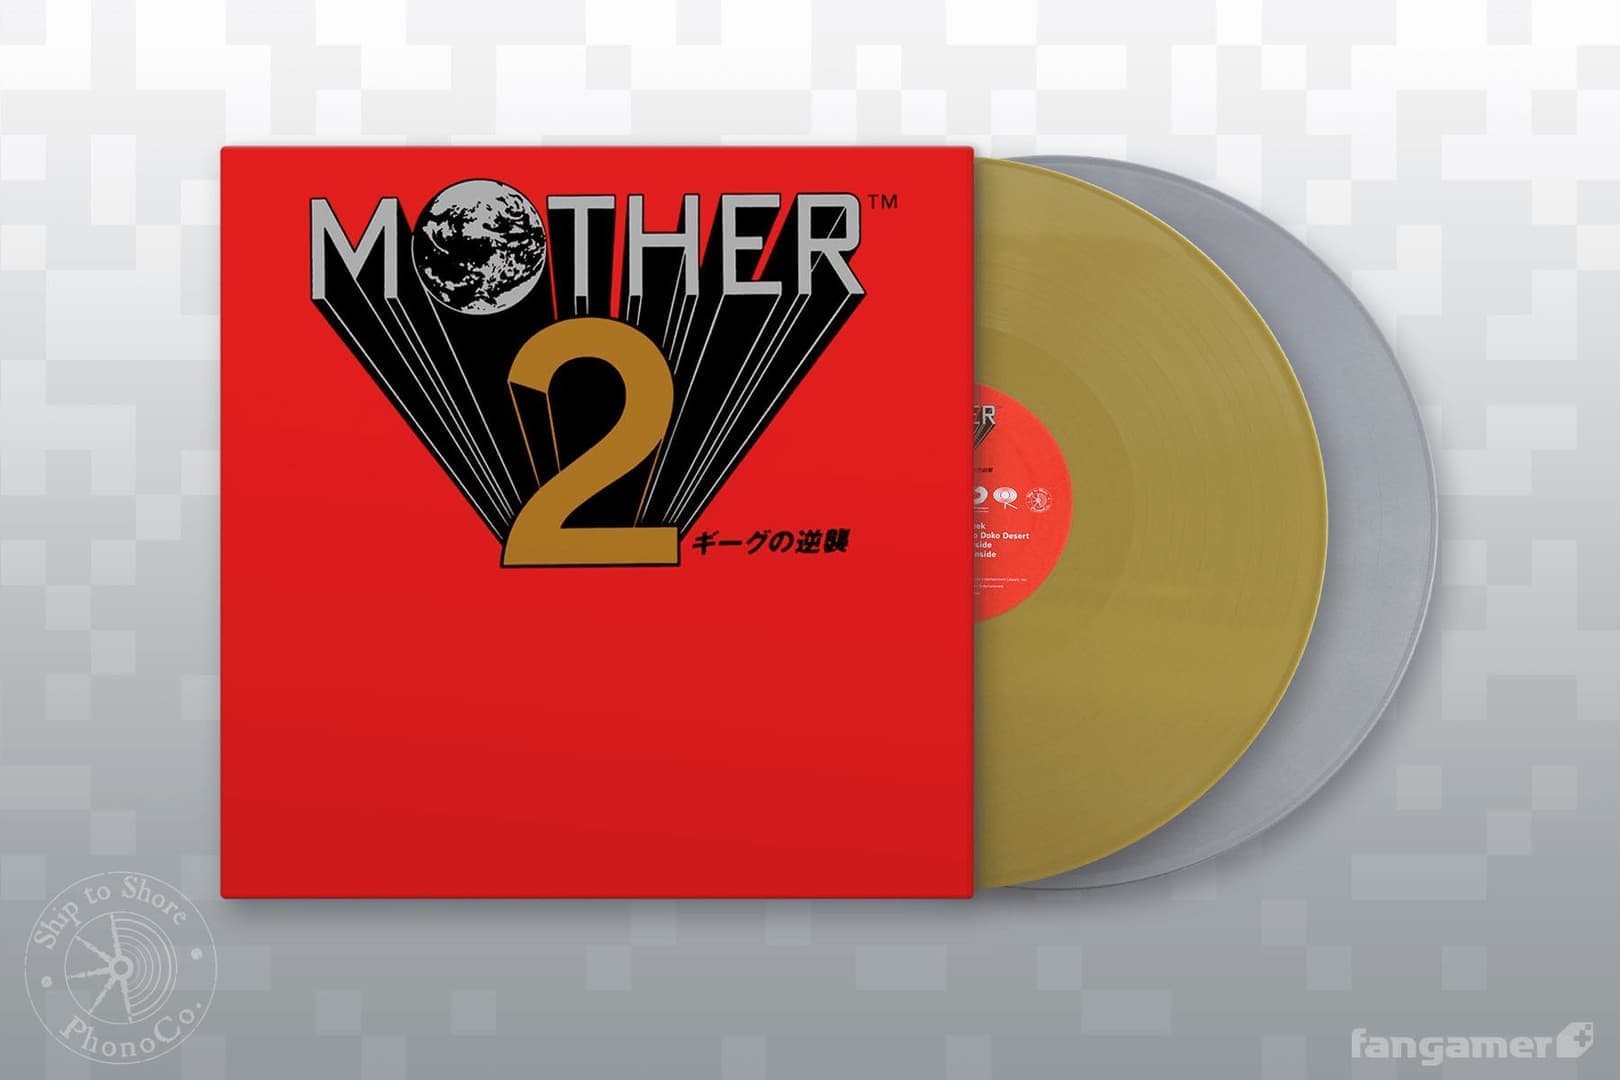 CD MOTHER2 ギーグの逆襲 マザー2 サントラ 未開封品 見本盤 非売品 